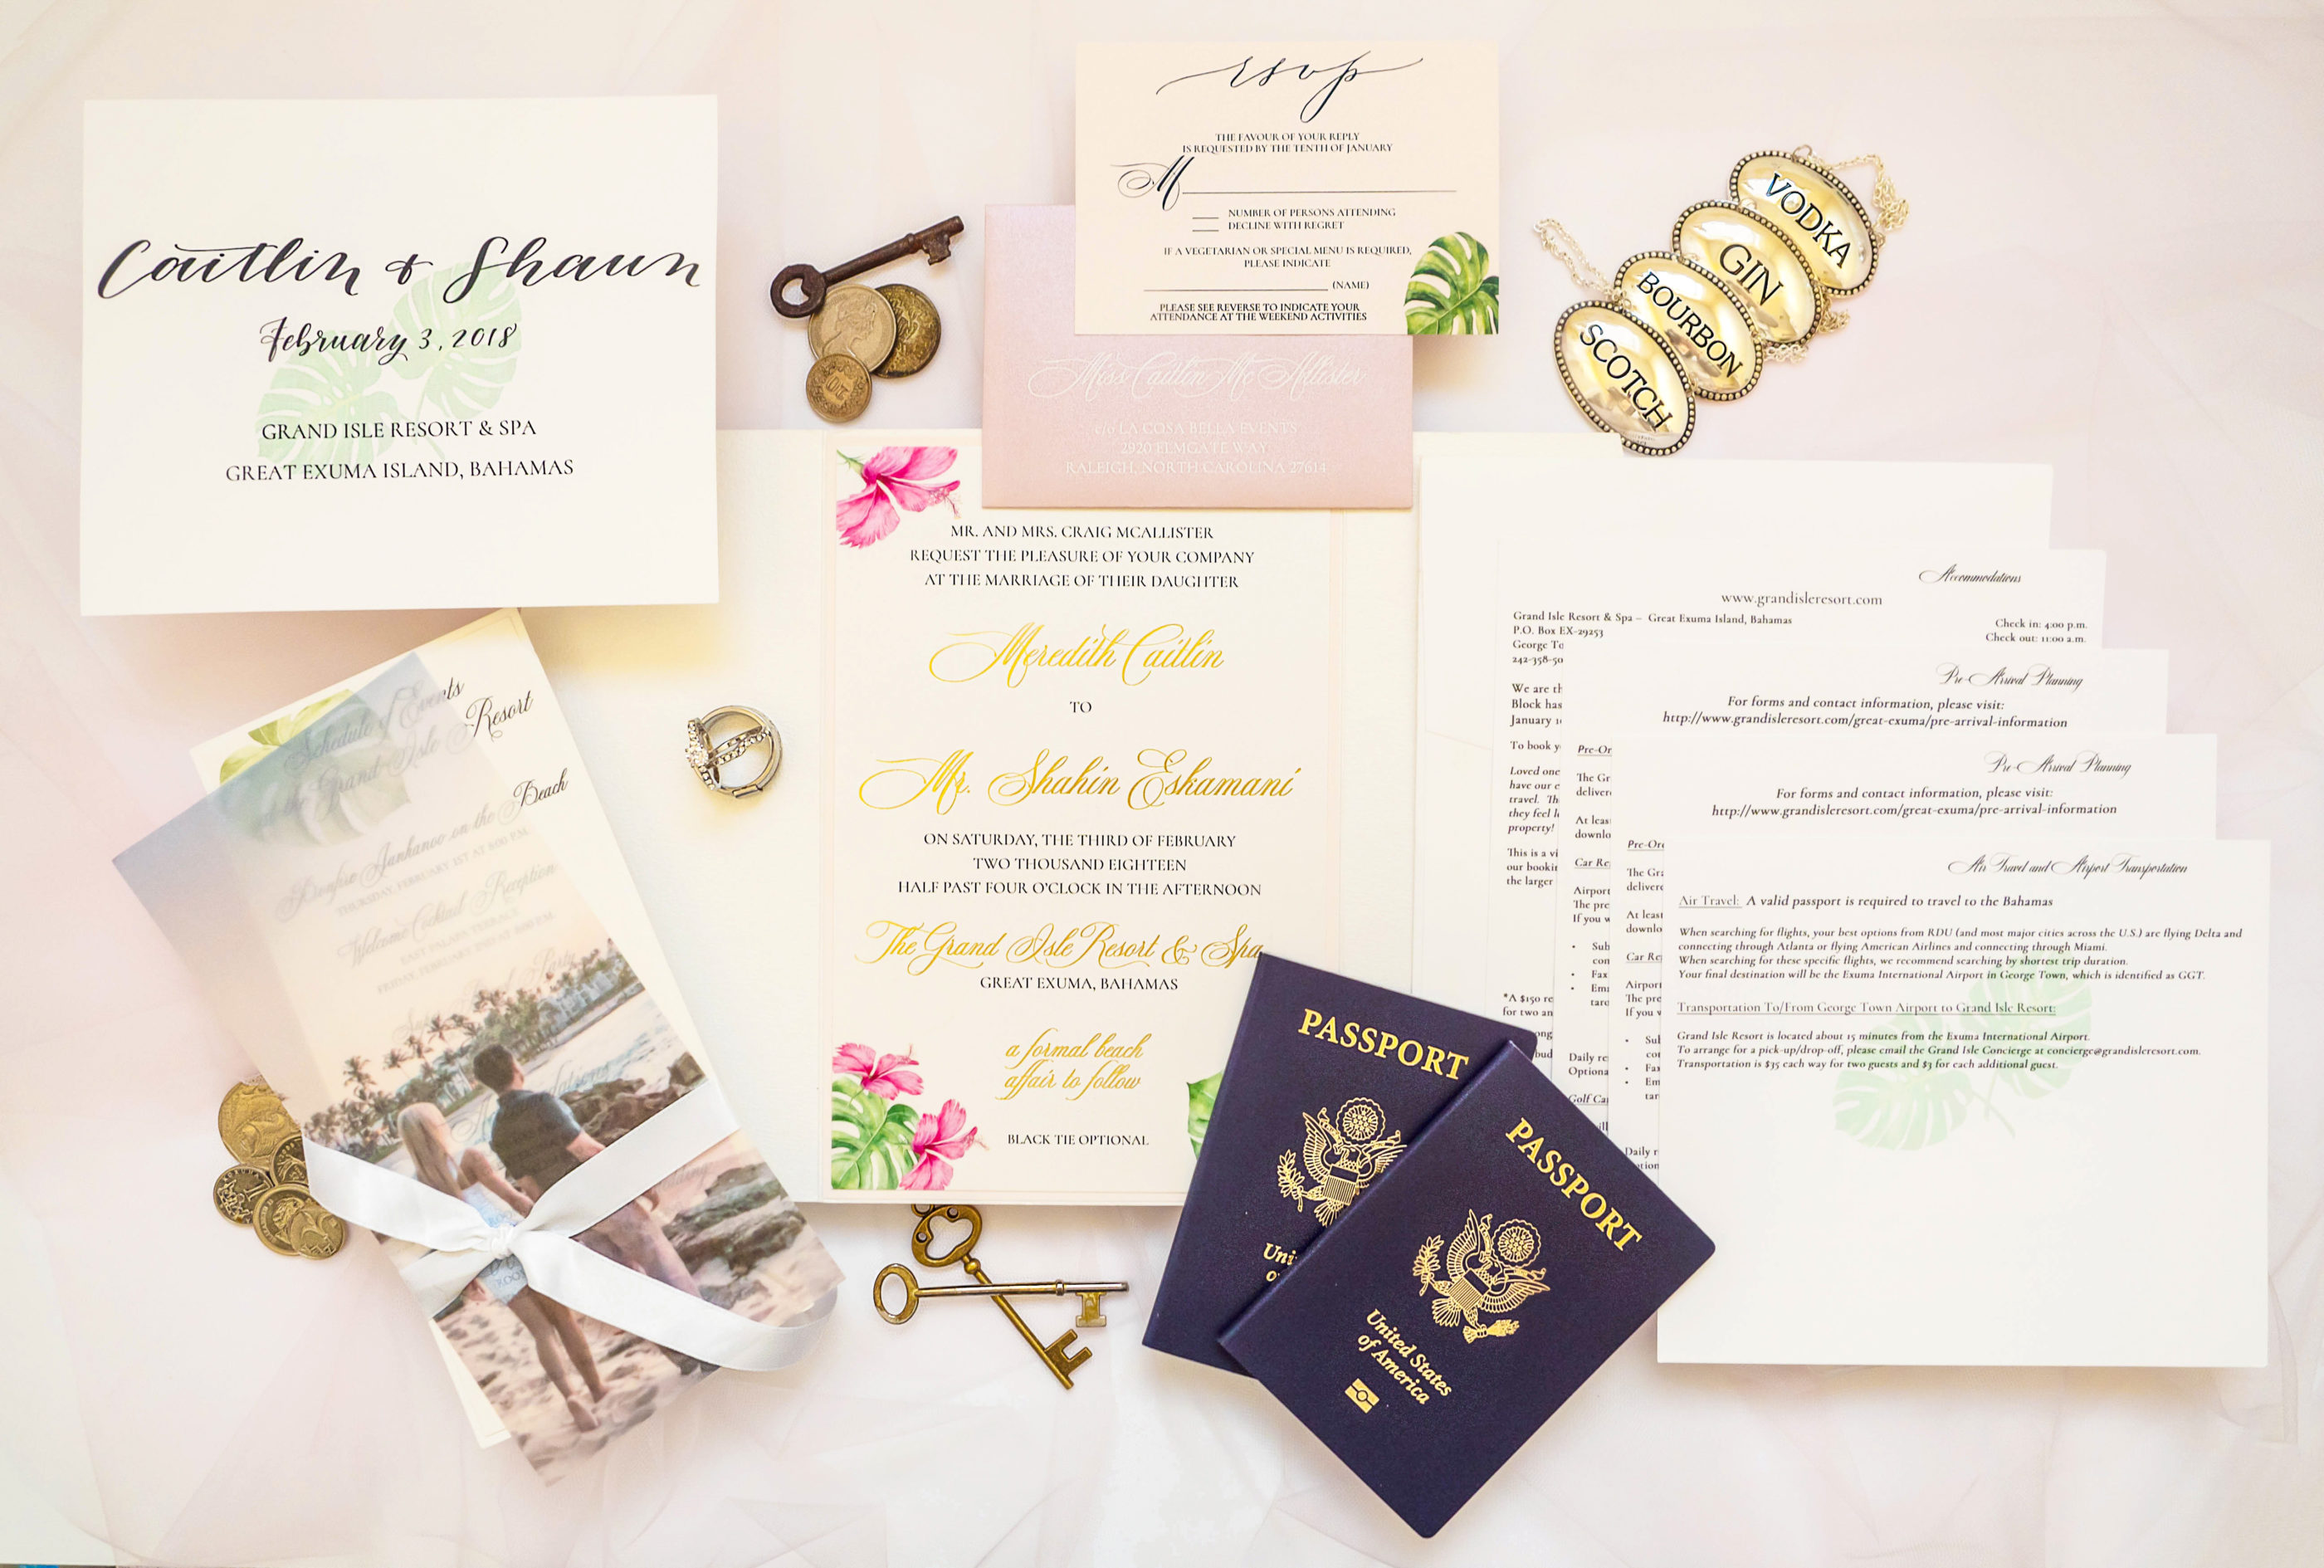 grand bahamas destination wedding invitation suite and passports